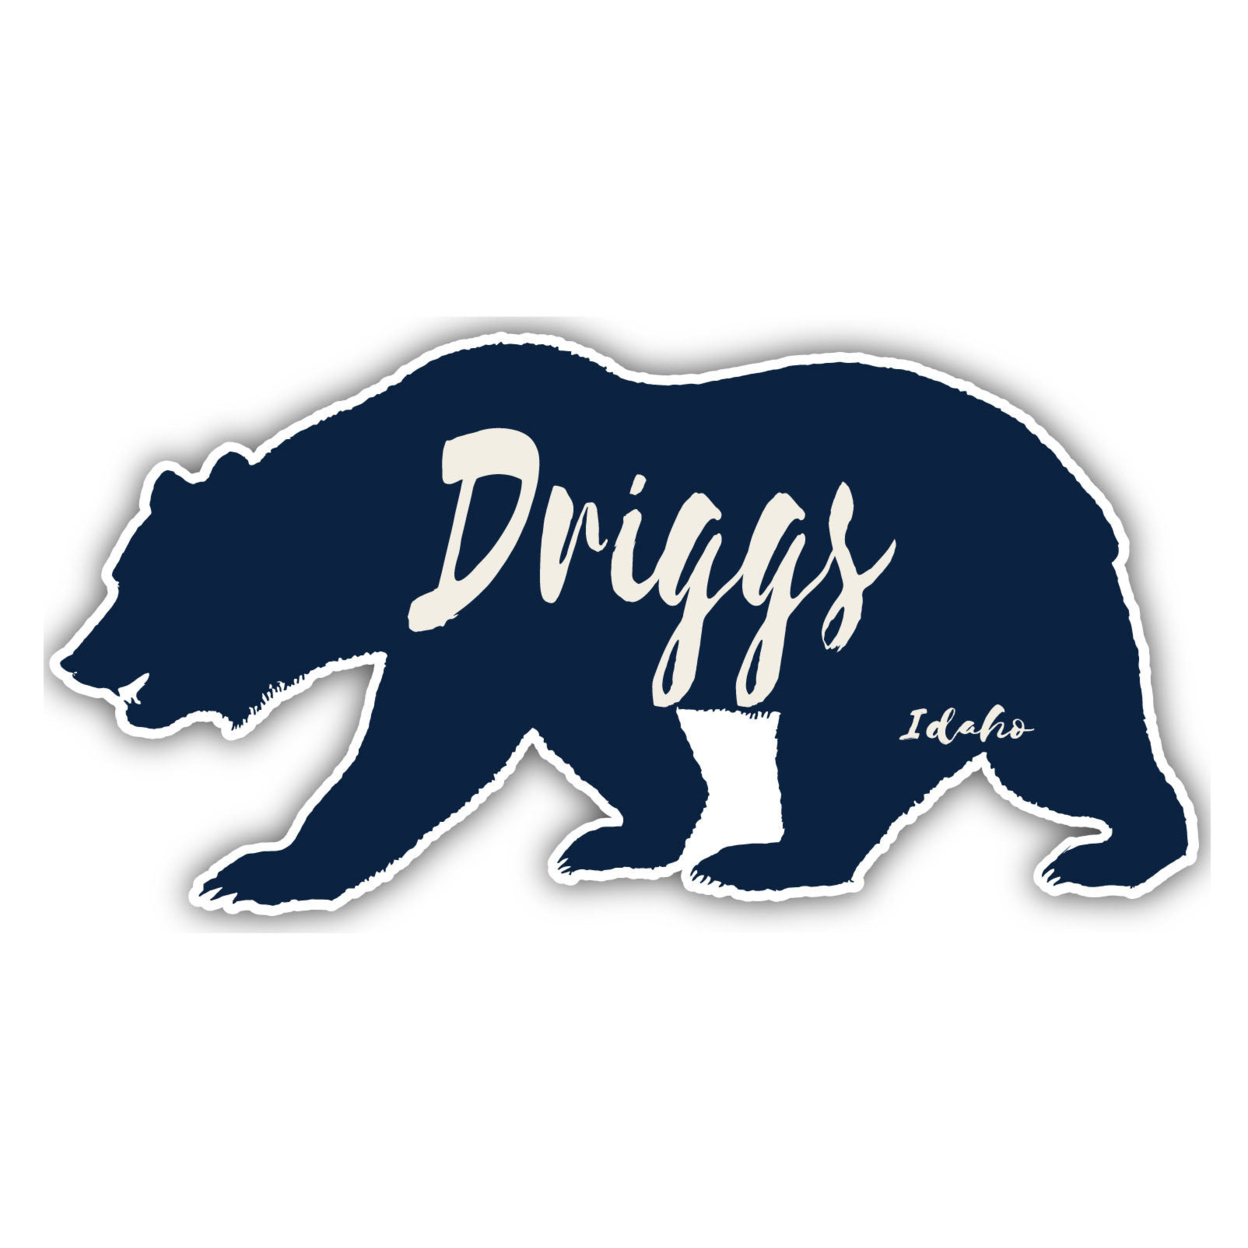 Driggs Idaho Souvenir Decorative Stickers (Choose Theme And Size) - Single Unit, 2-Inch, Tent